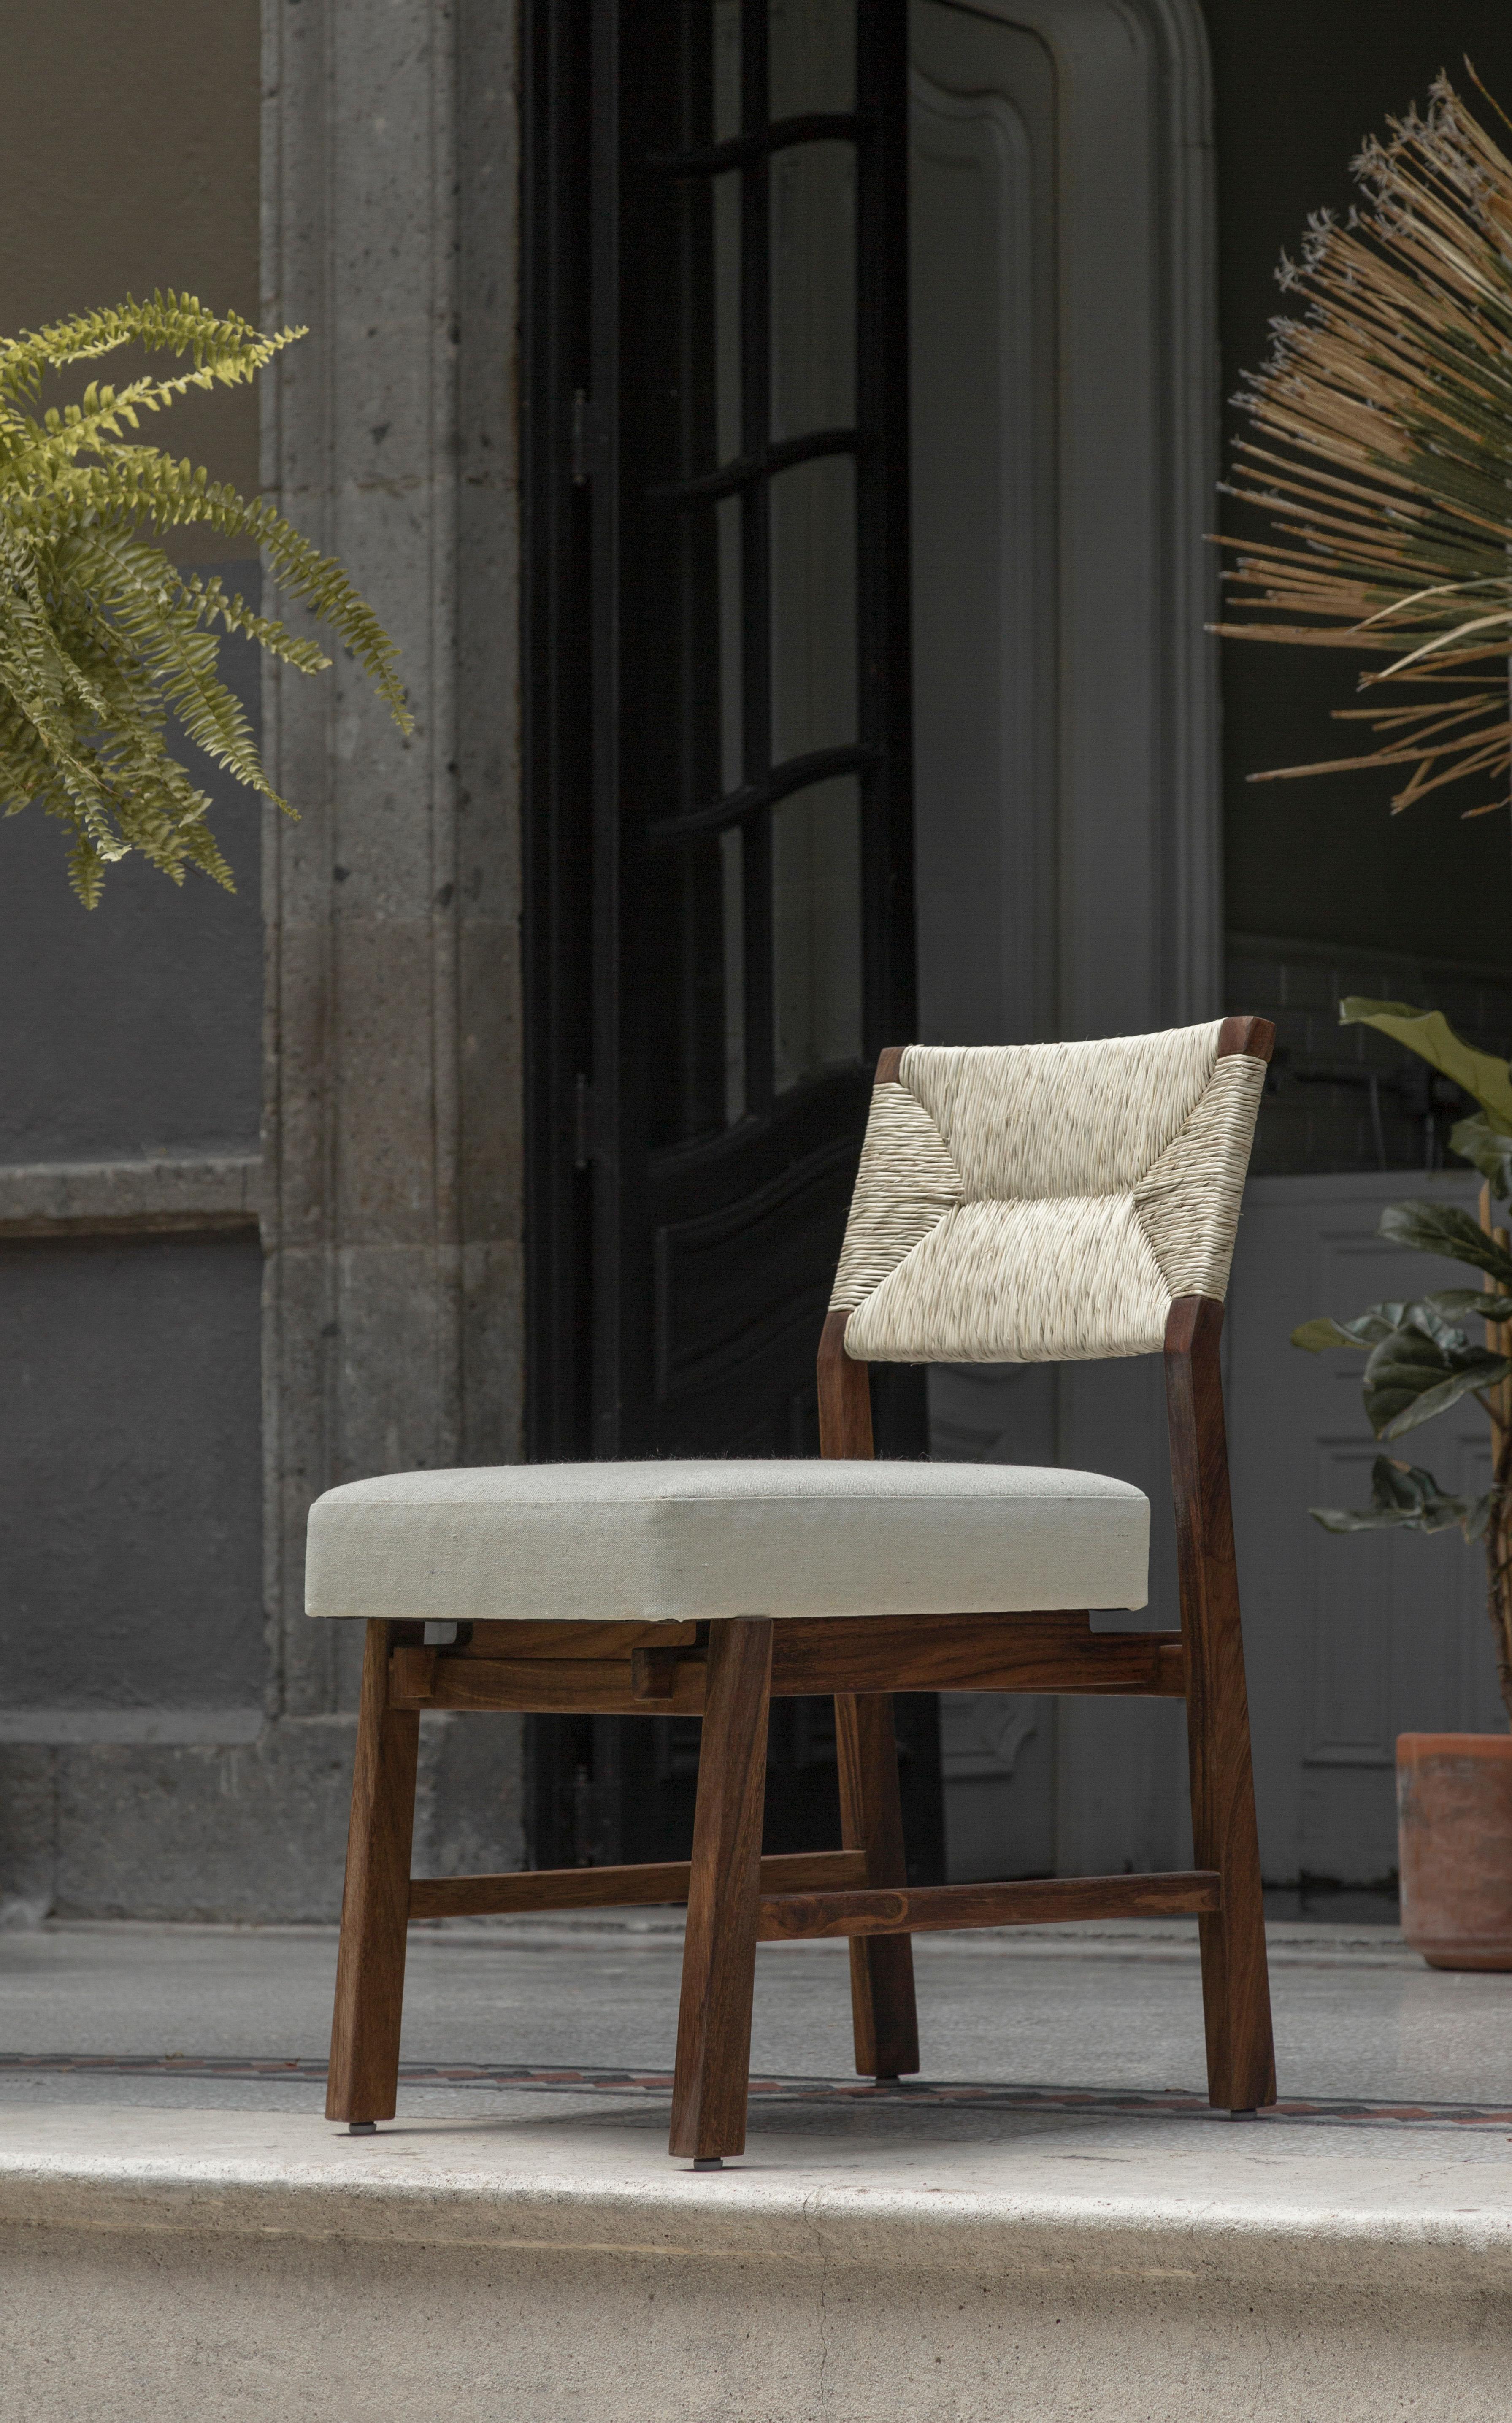 Natural Fiber Lago Dining Chair COM with Natural Palm Fiber Back, Contemporary Mexican Design